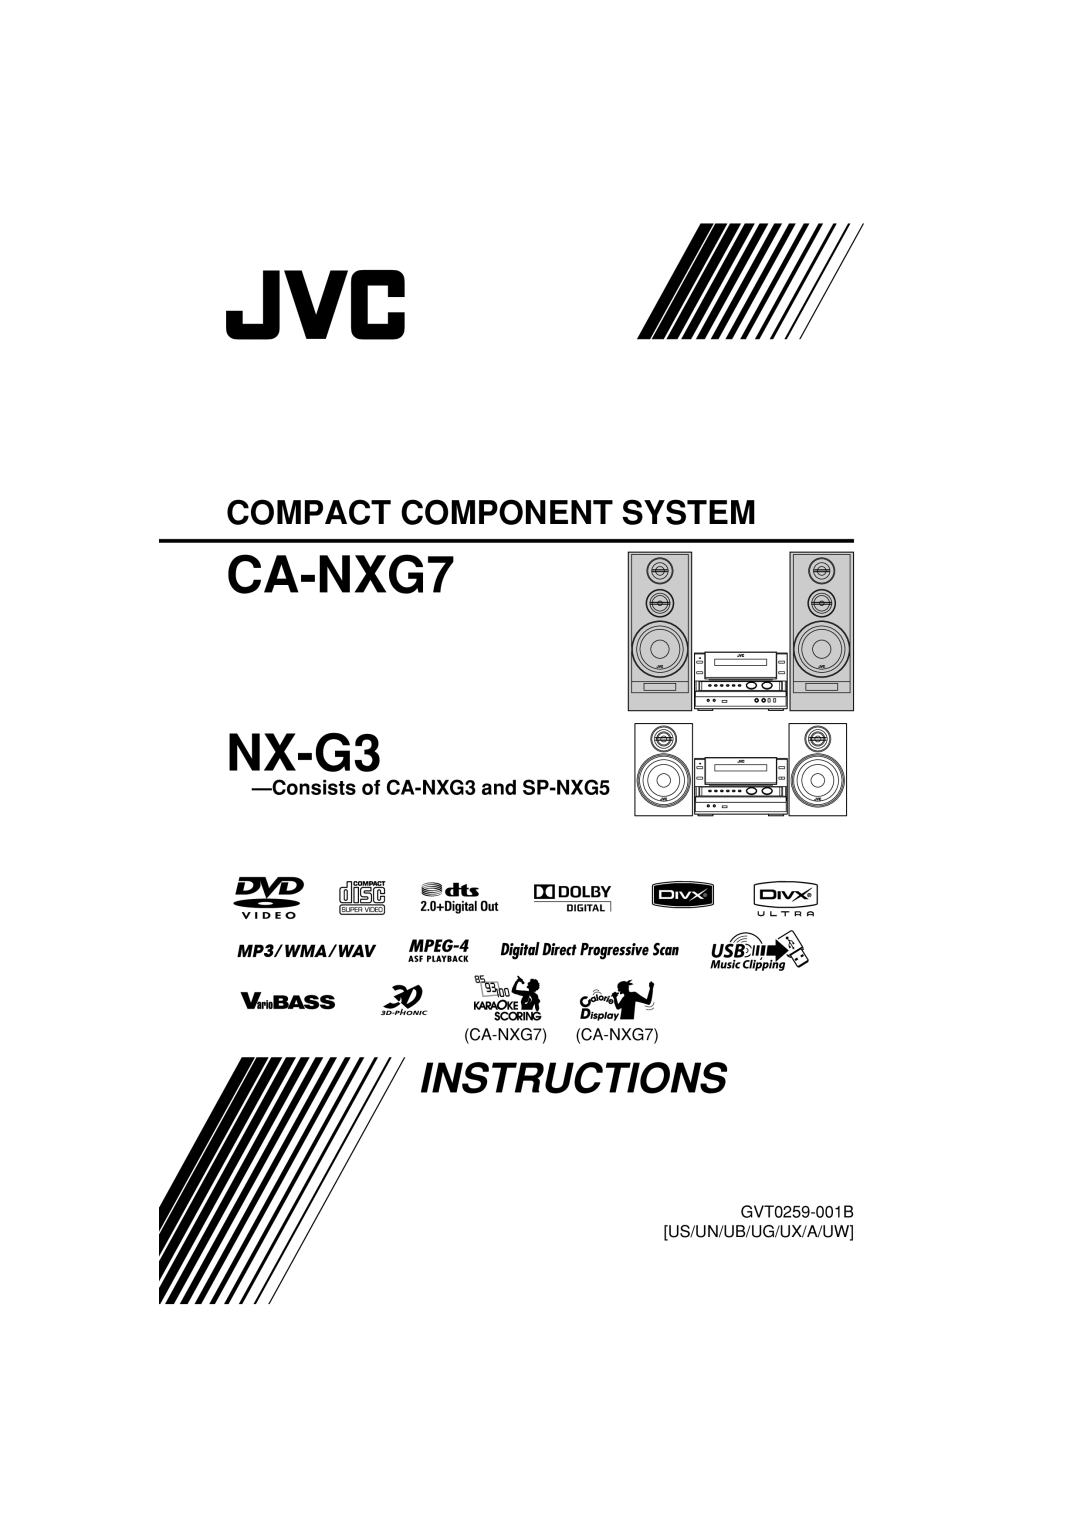 JVC CA-NXG9 manual CA-NXG7 NX-G3, Consistsof CA-NXG3and SP-NXG5, Instructions, Compact Component System 